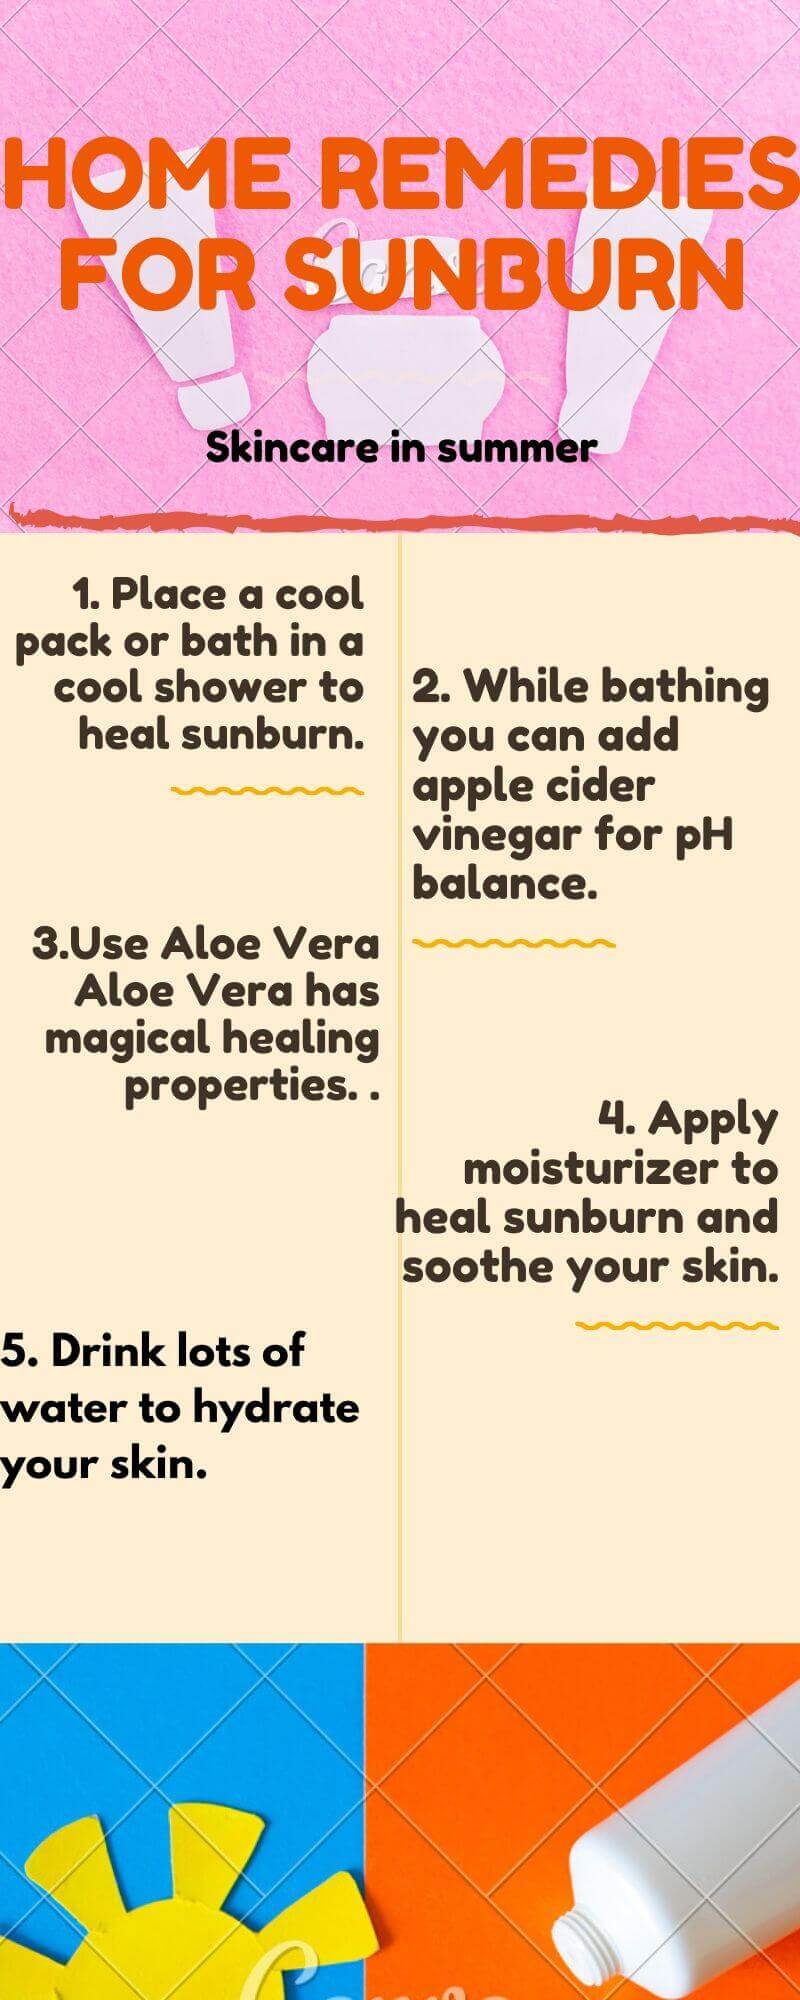 Home remedies for sunburn